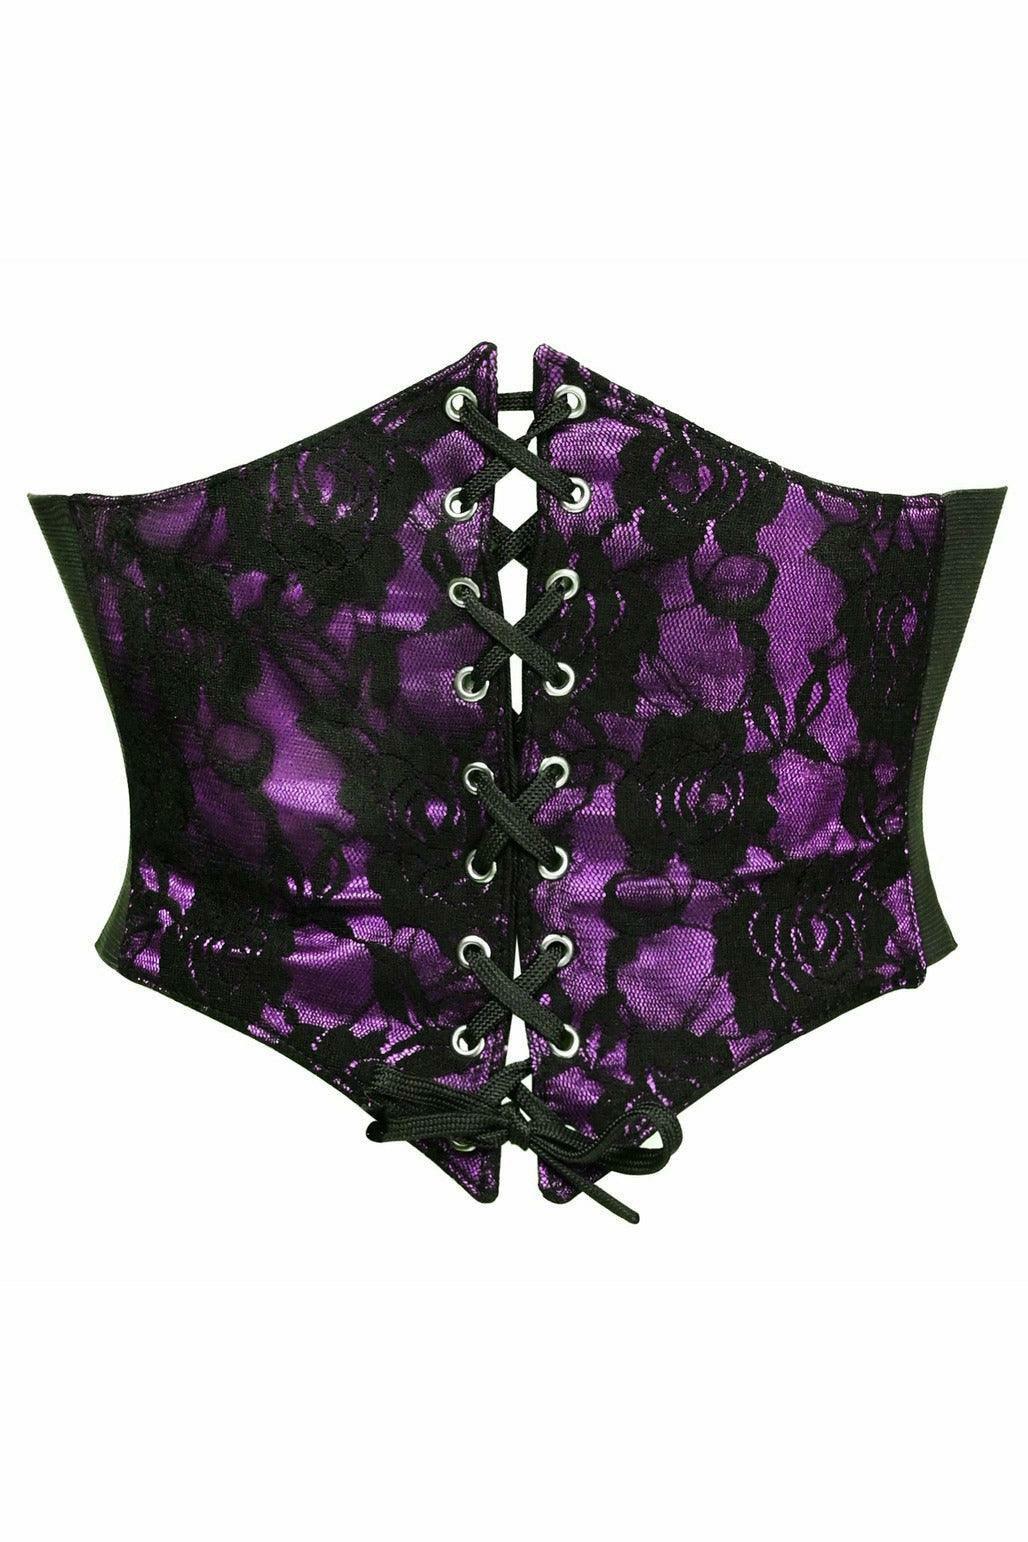 Lavish Purple w/Black Lace Overlay Corset Belt Cincher - Flyclothing LLC